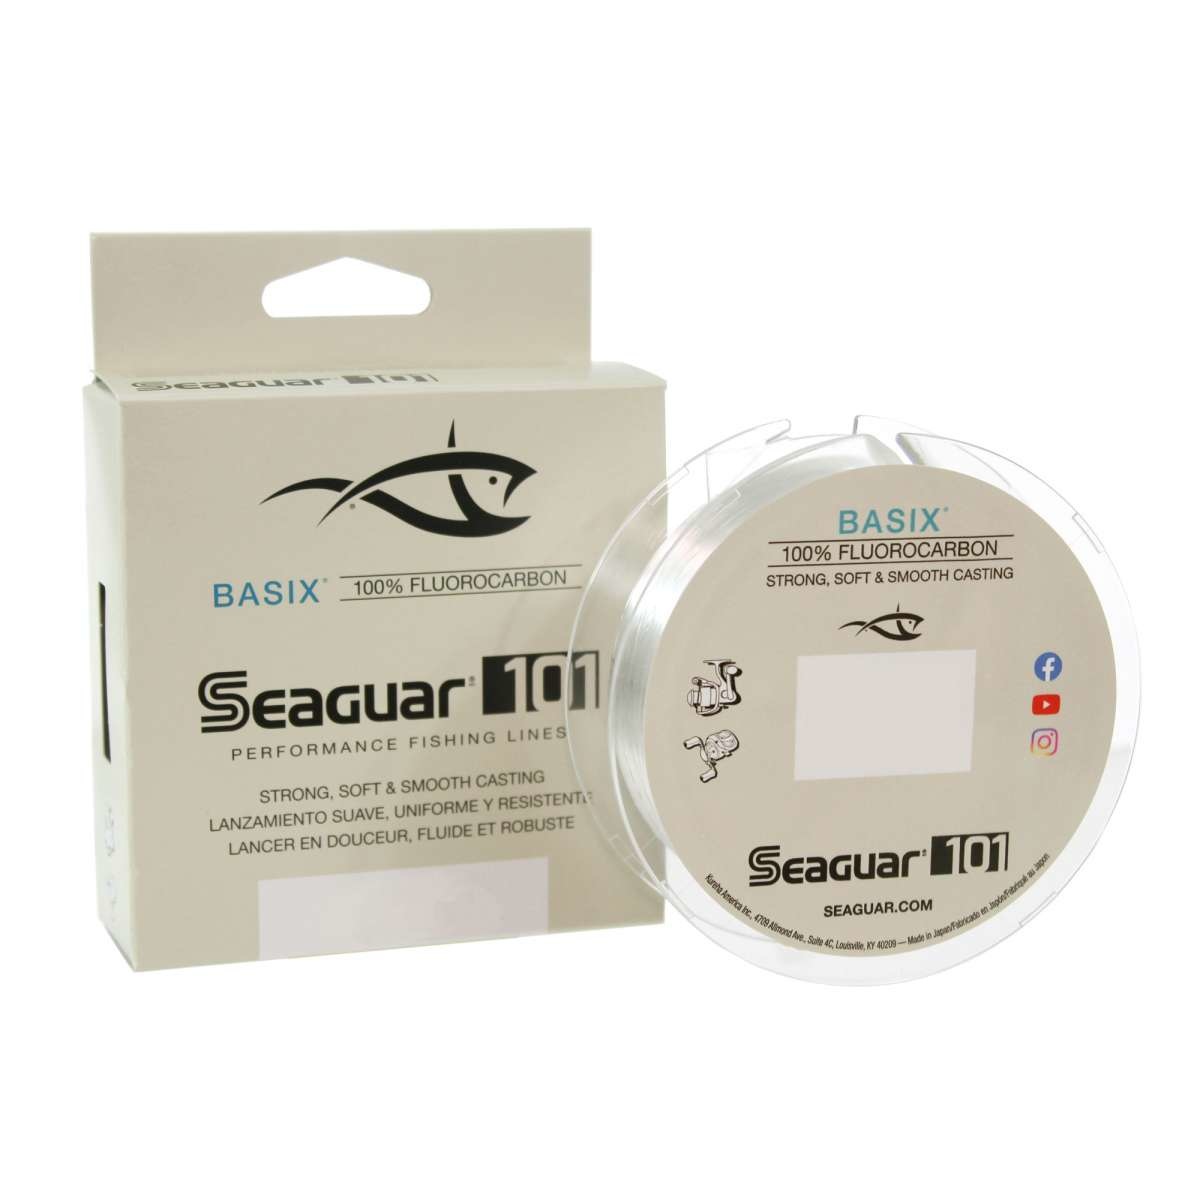 Seaguar Basix Fluorocarbon 10 lb